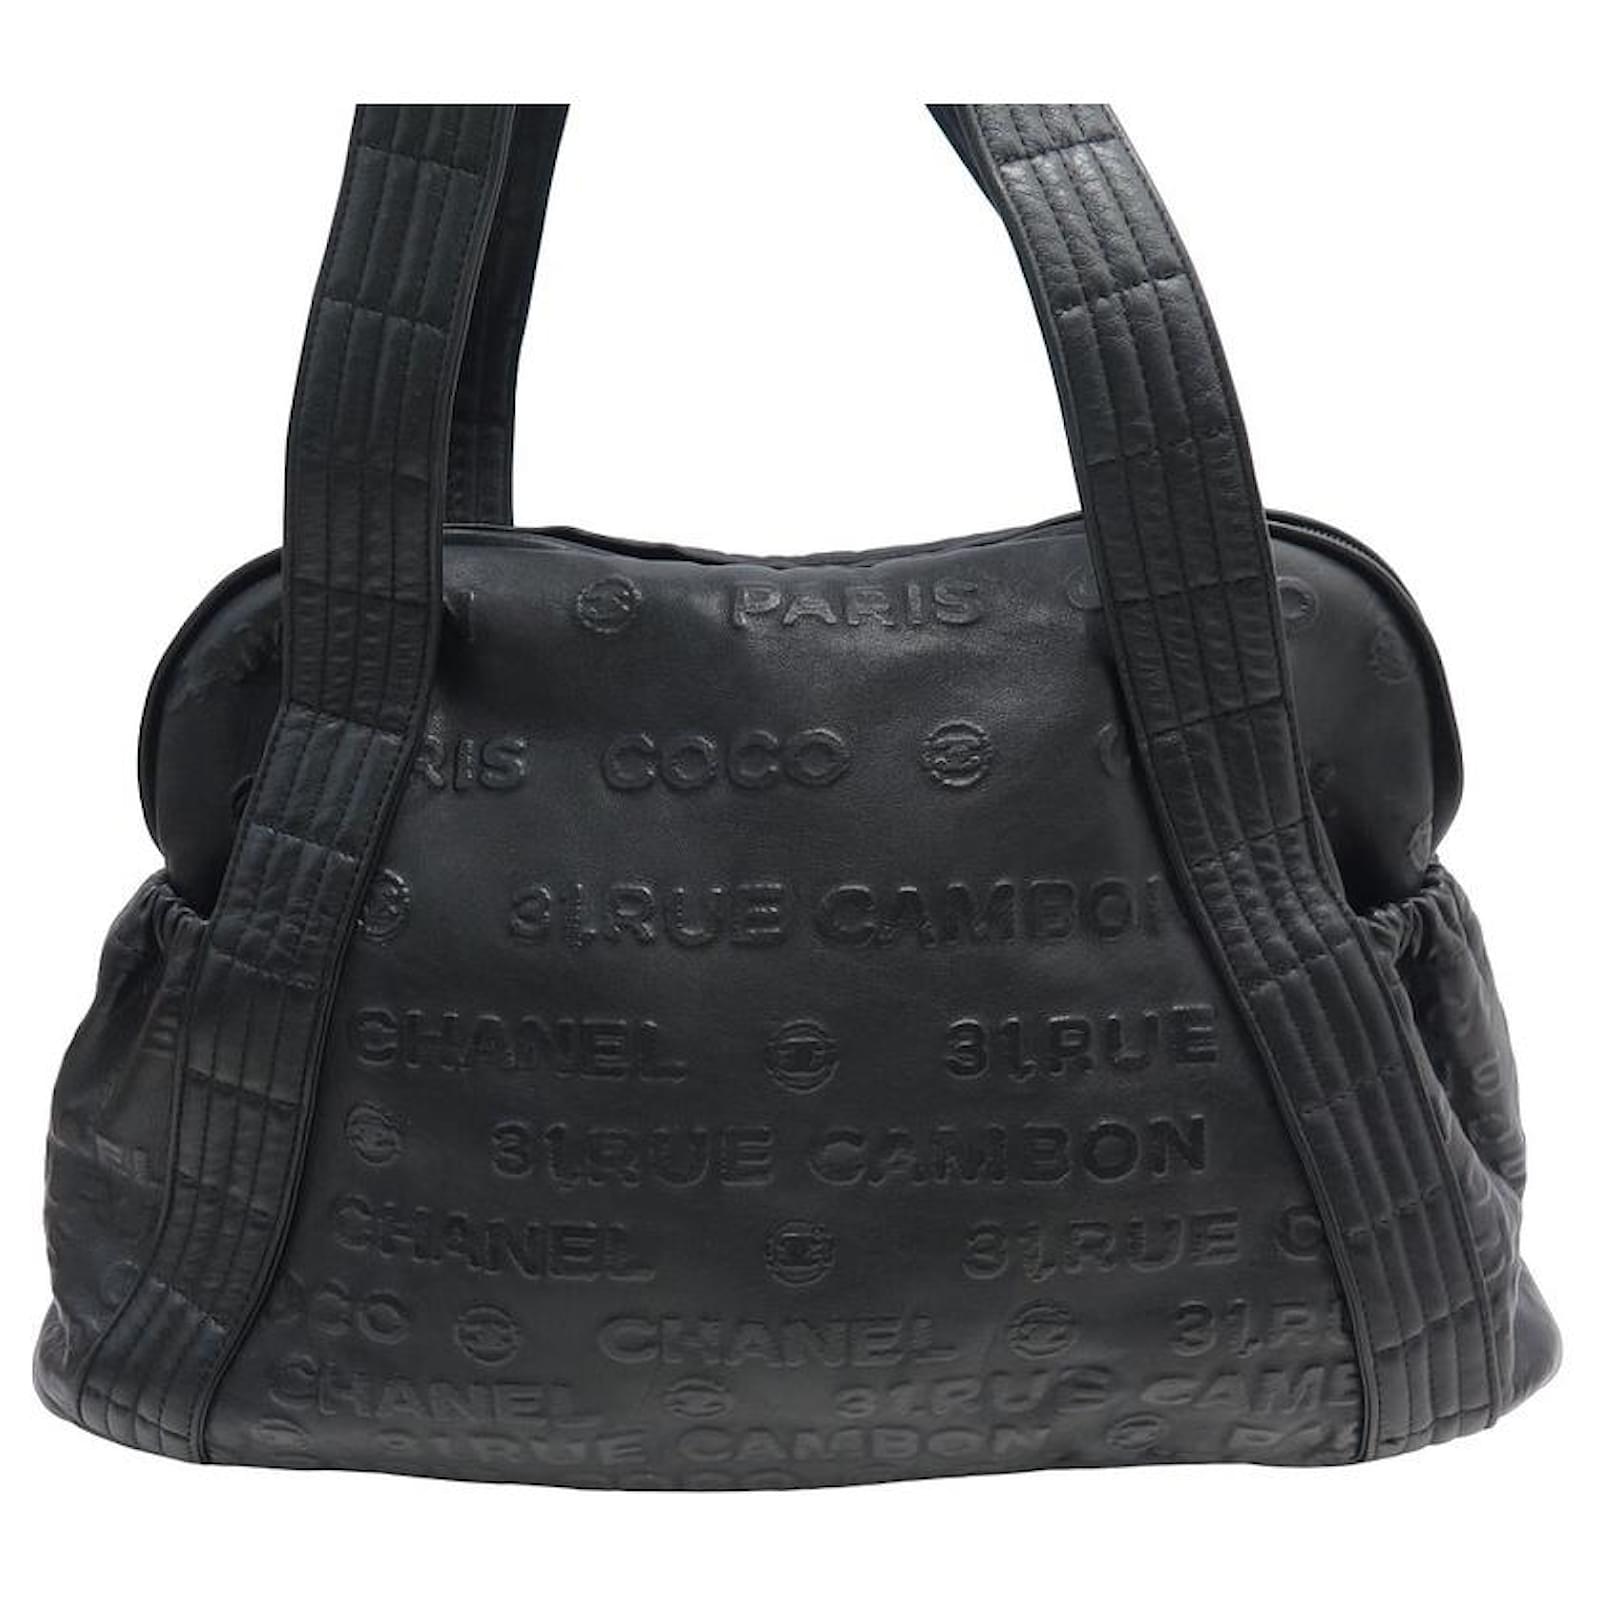 Handbags Chanel Chanel Bowling Handbag 31 Rue Cambon Black Leather Hand Bag Purse